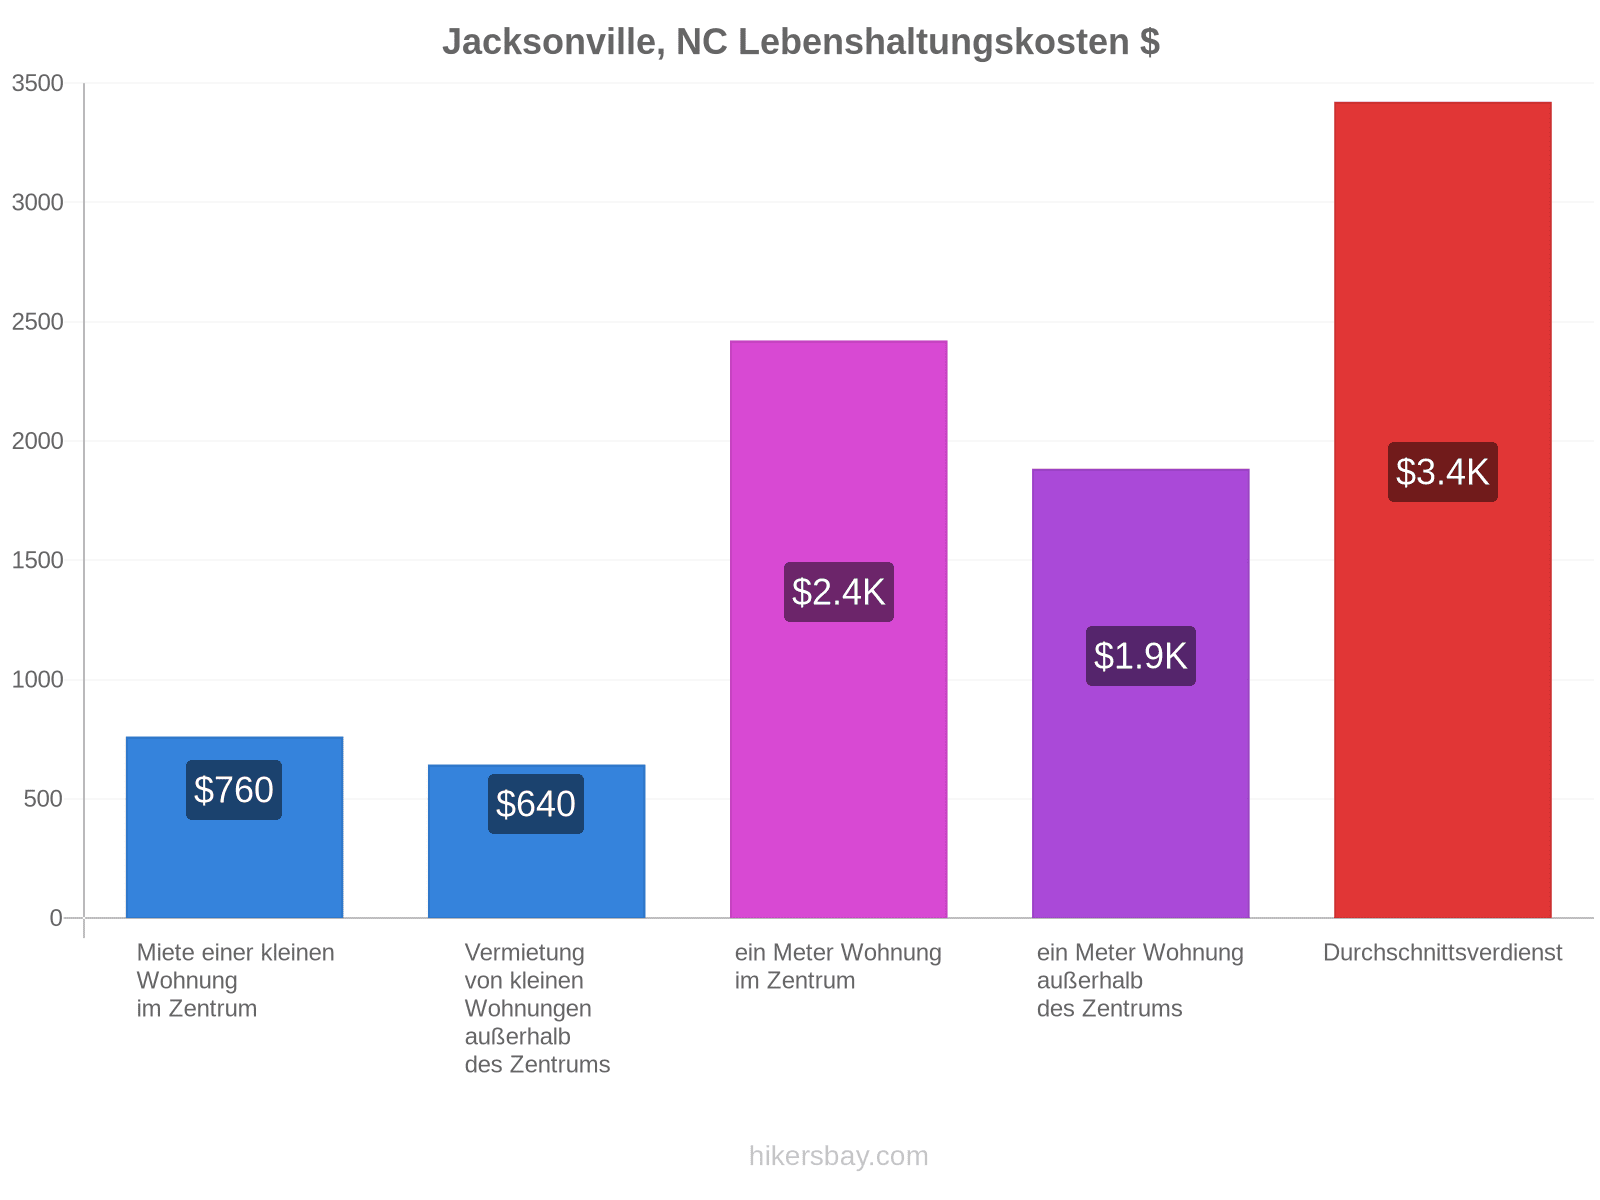 Jacksonville, NC Lebenshaltungskosten hikersbay.com